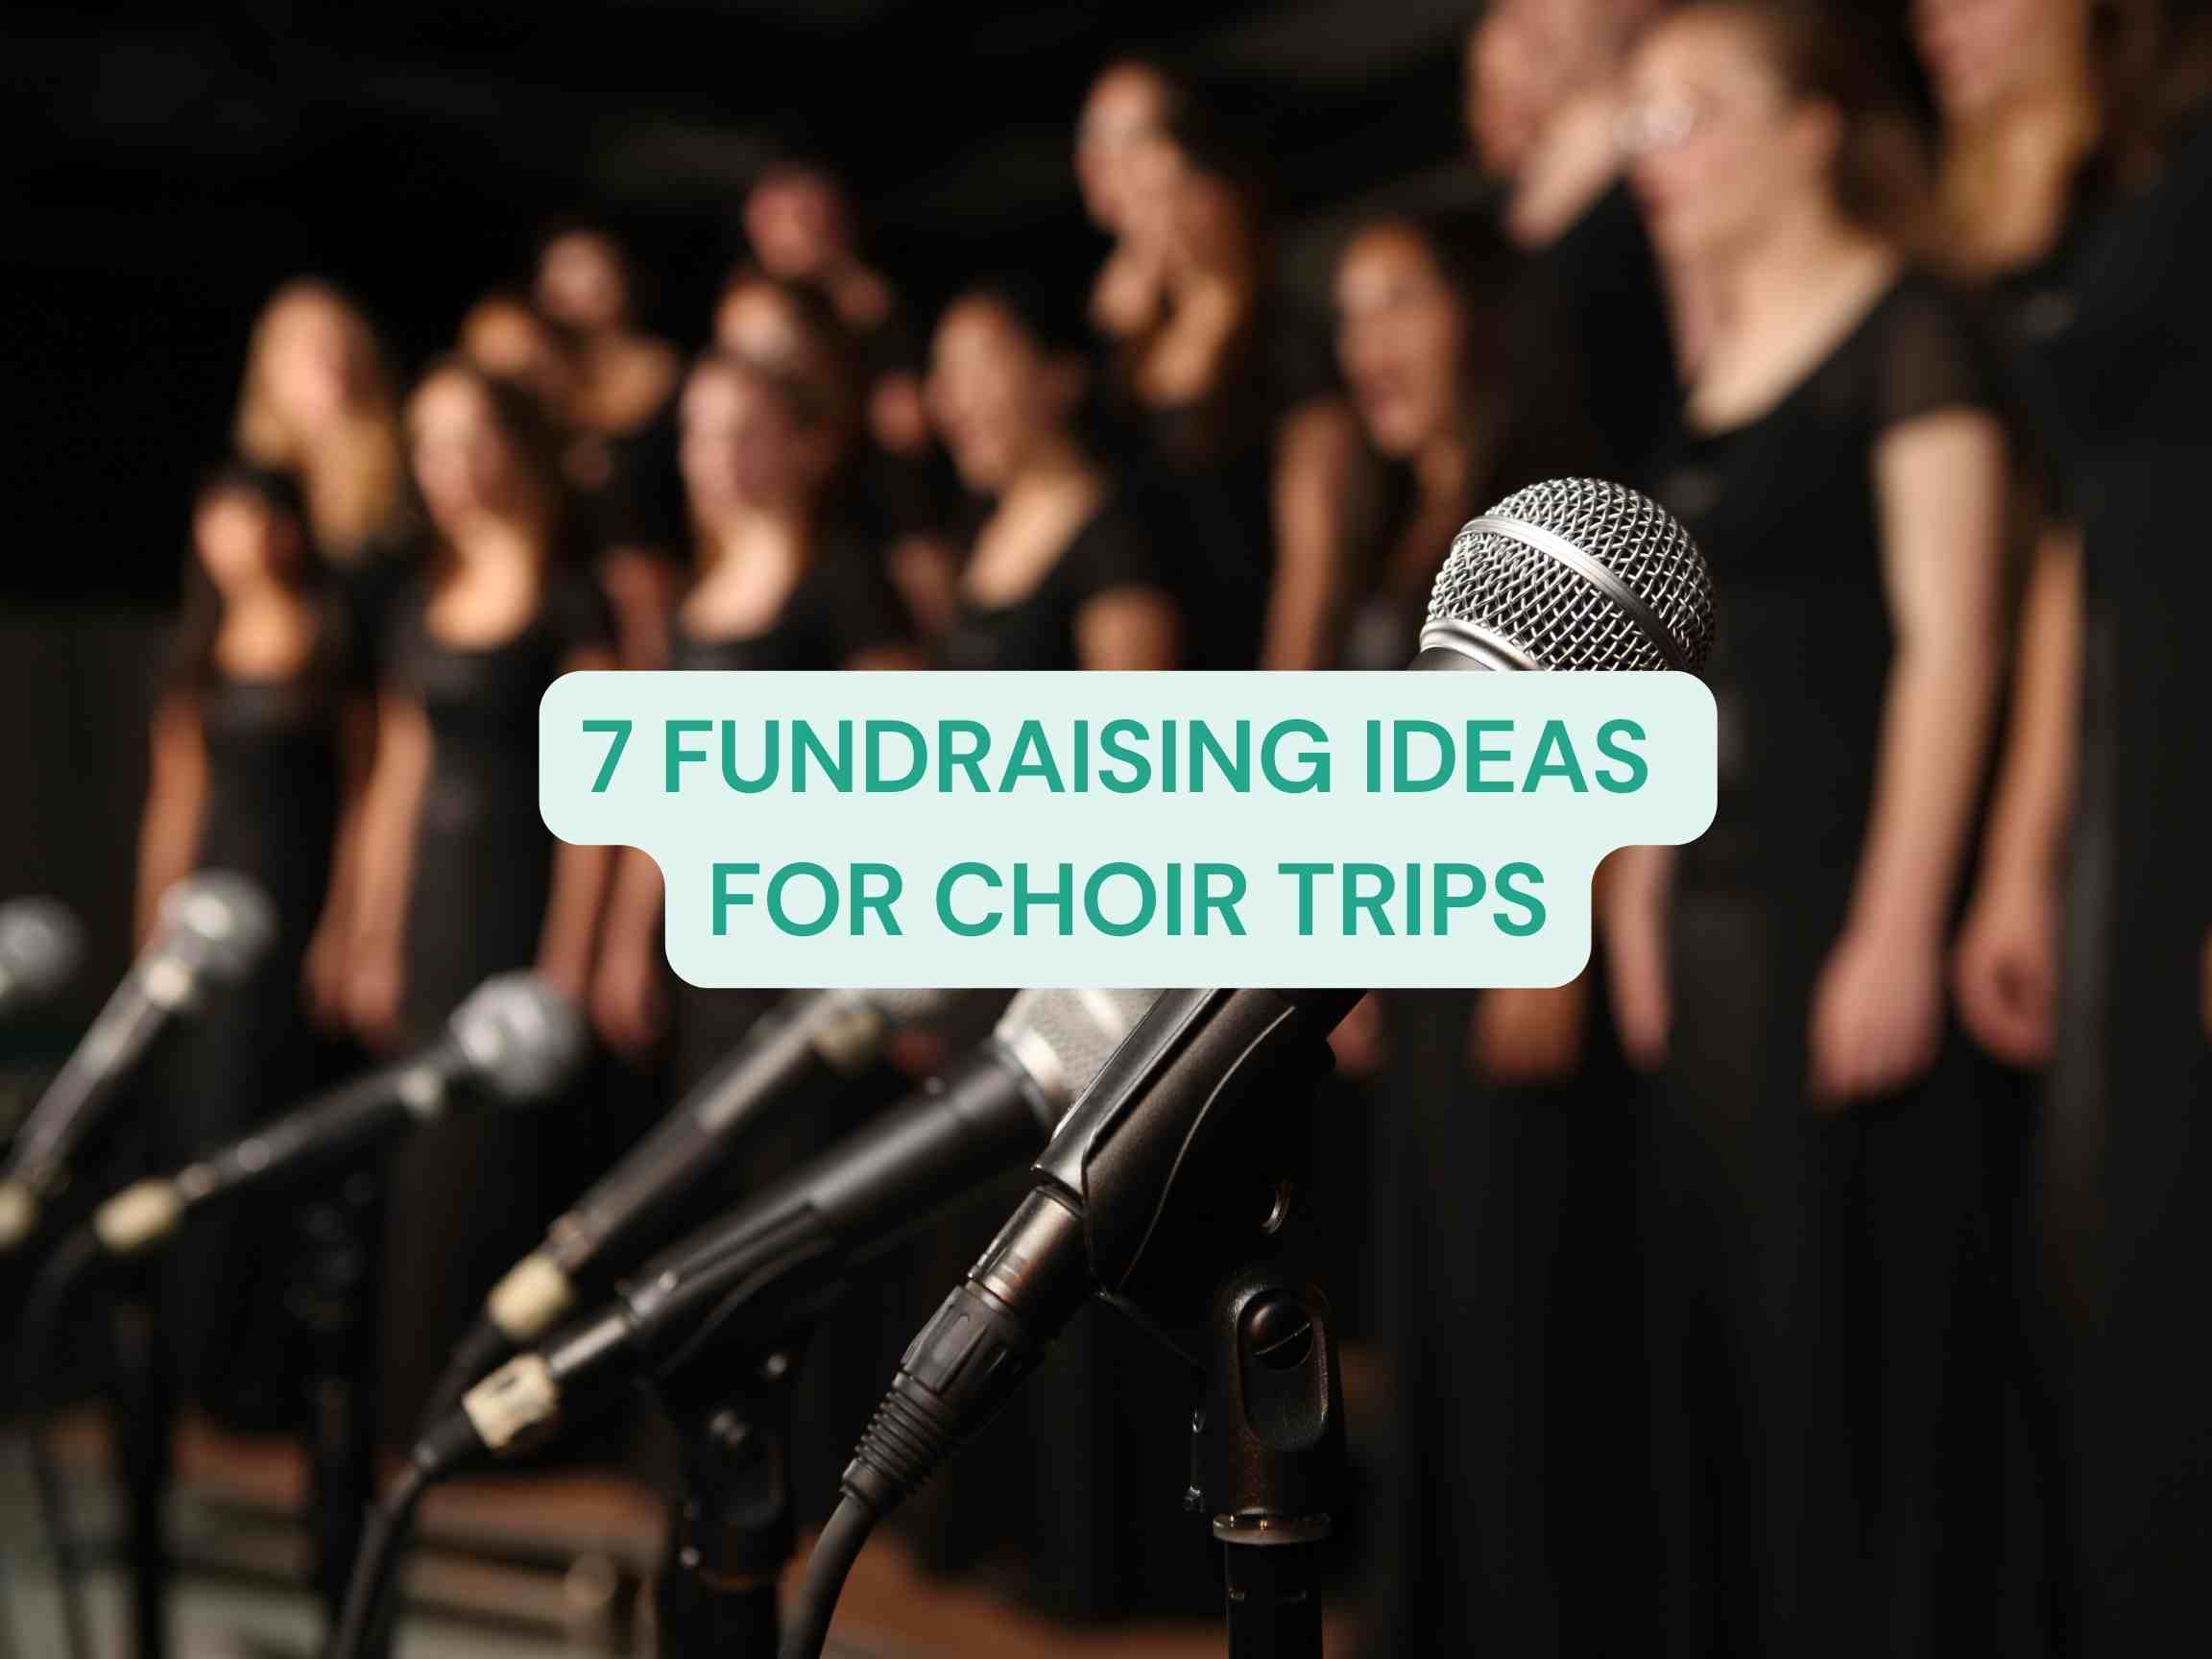 Fundraising ideas for choir trips